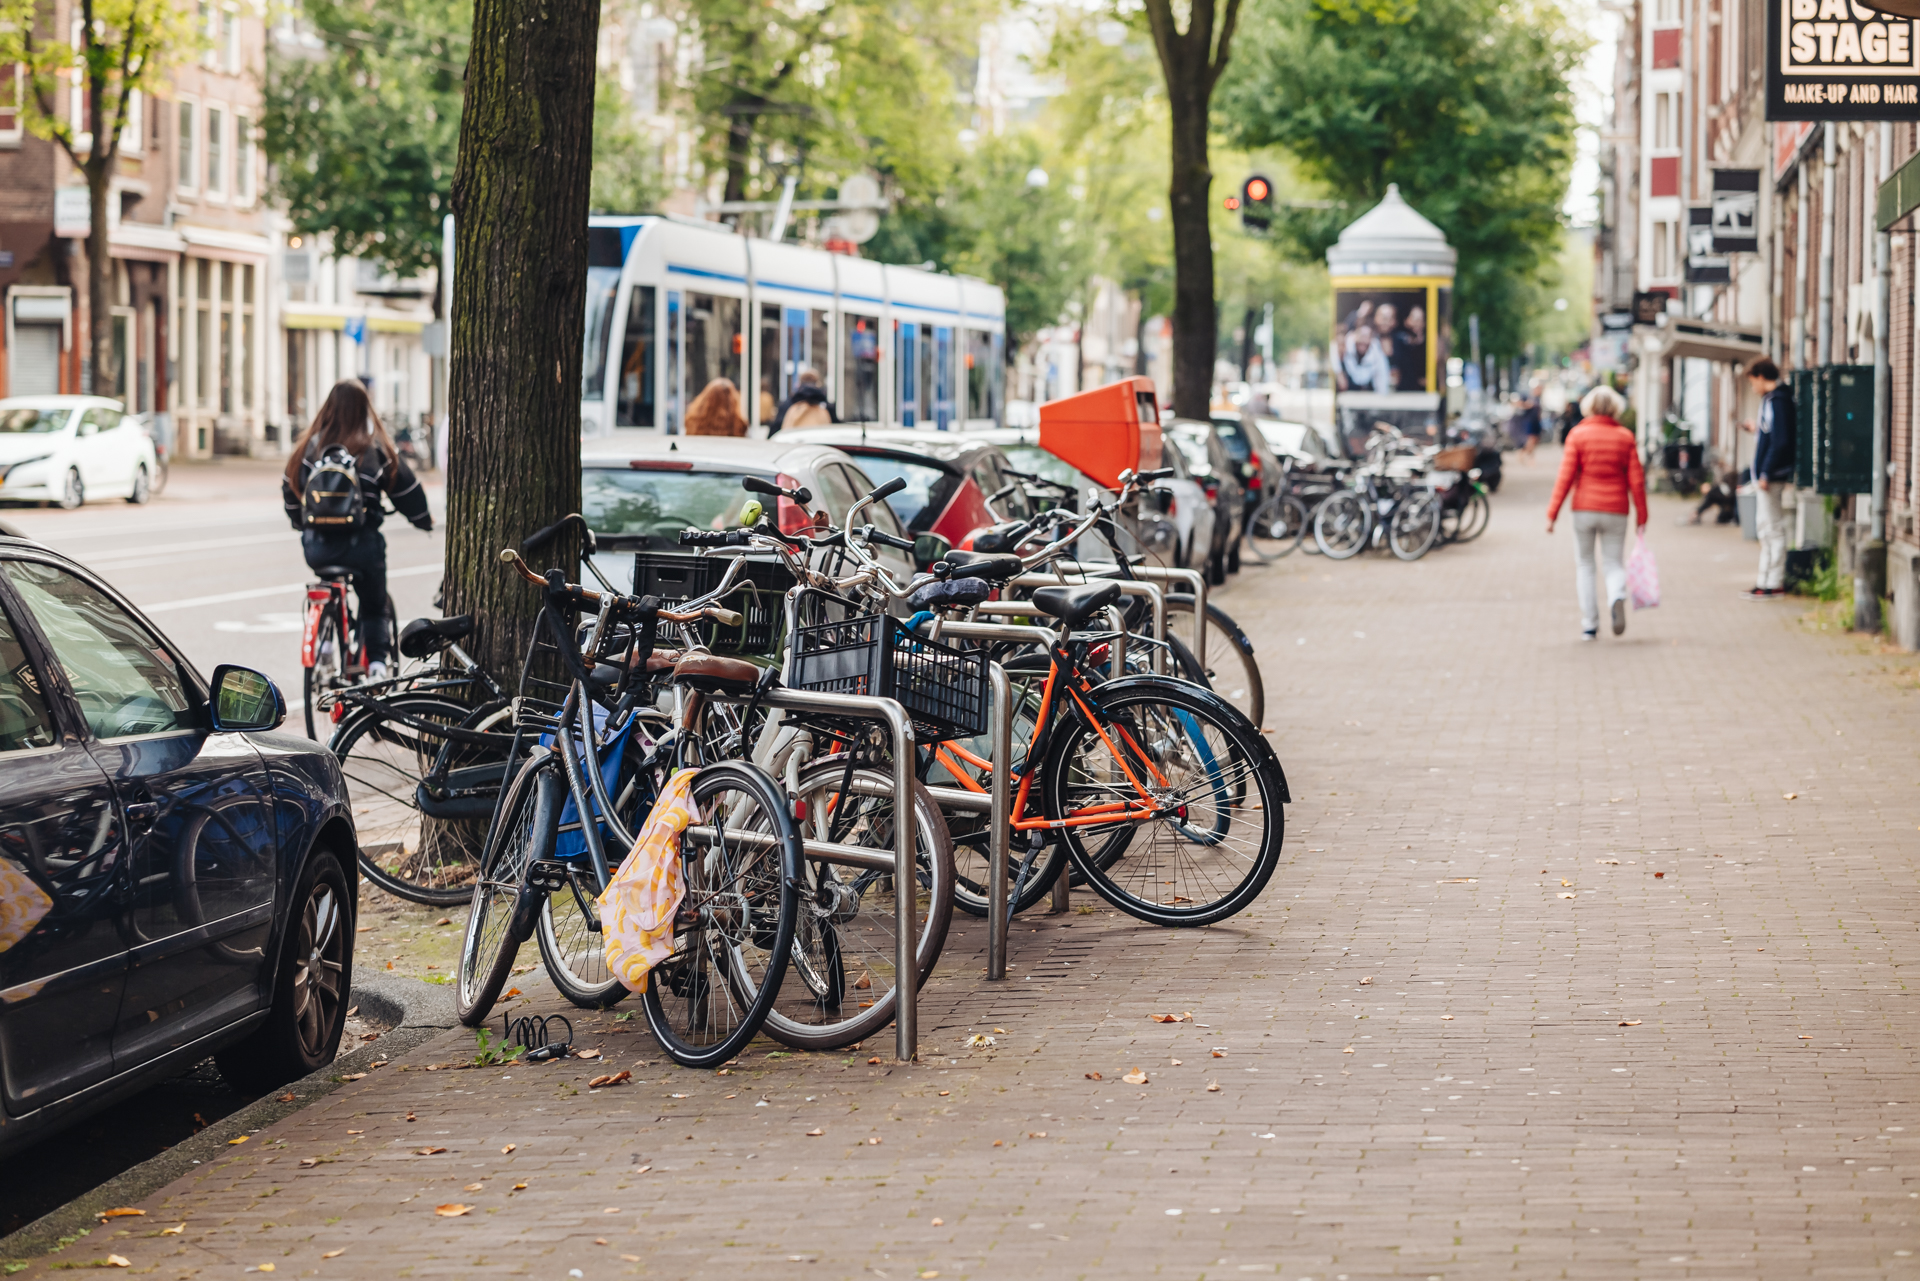 Street life in Amsterdam